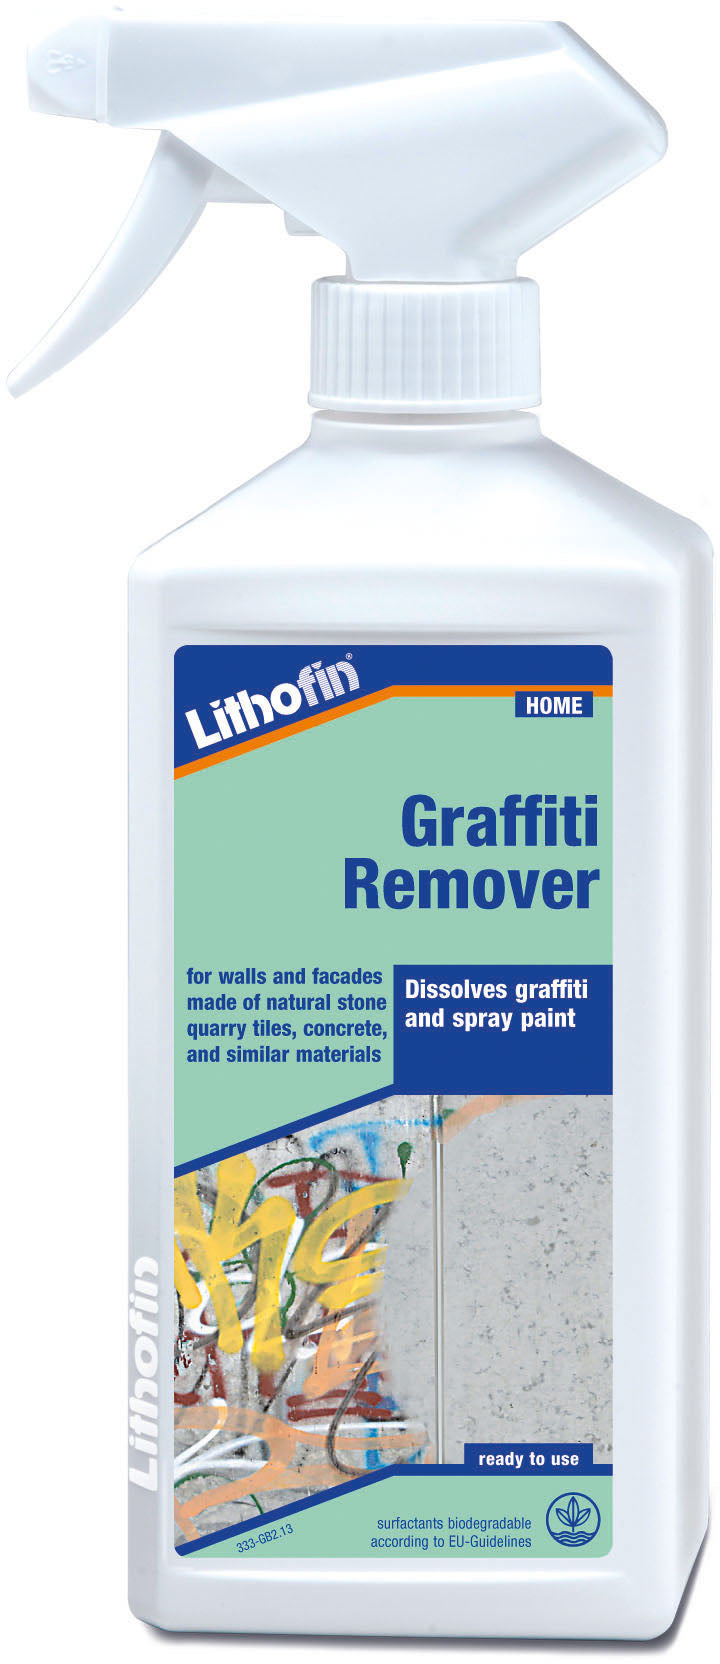 Lithofin Graffiti Remover - dissolves graffiti and spray paint 